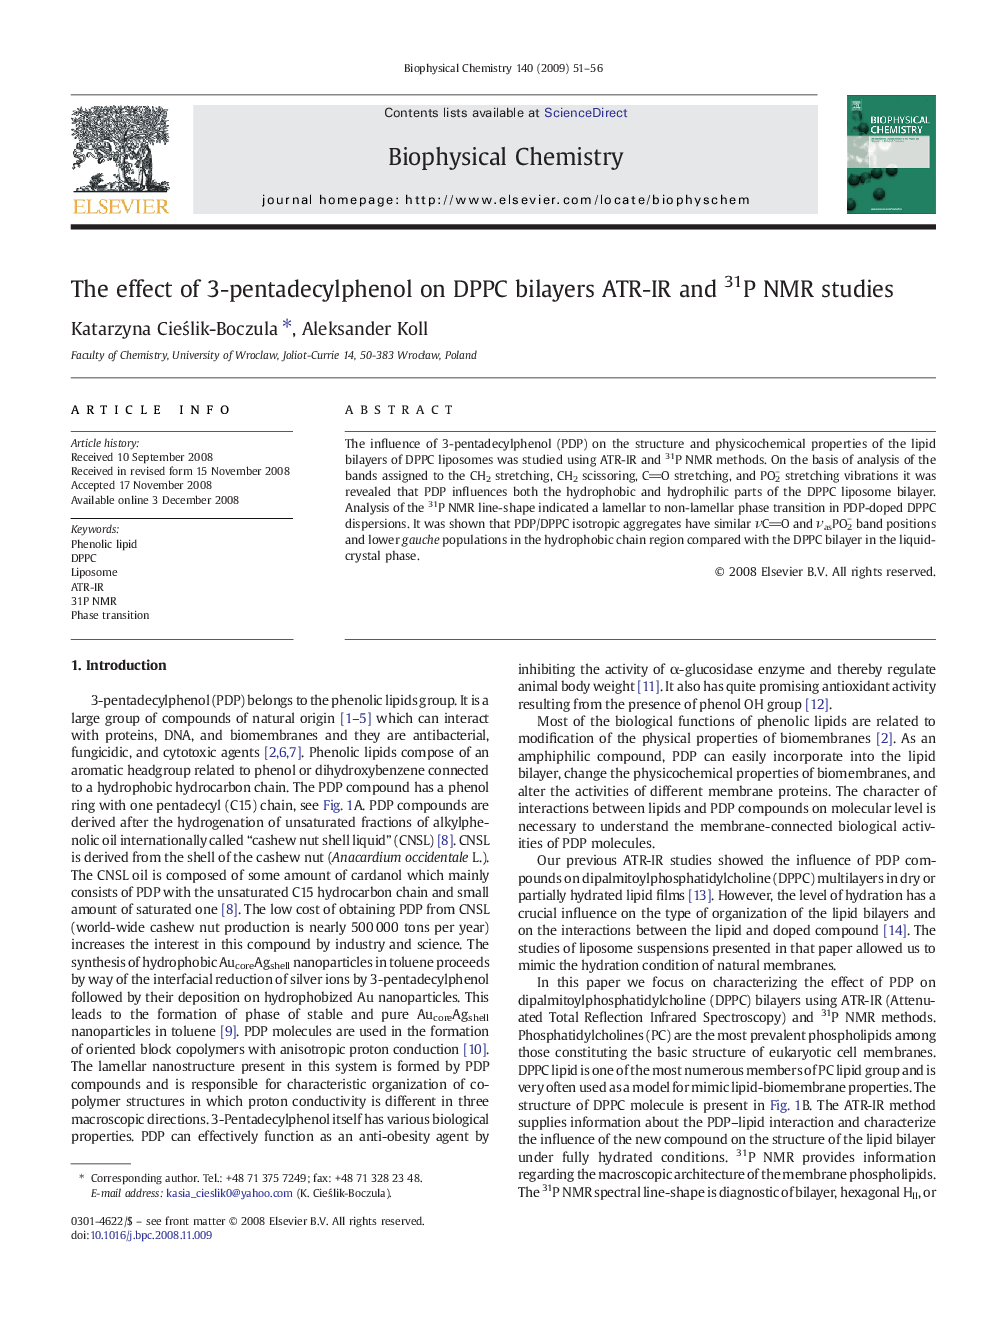 The effect of 3-pentadecylphenol on DPPC bilayers ATR-IR and 31P NMR studies